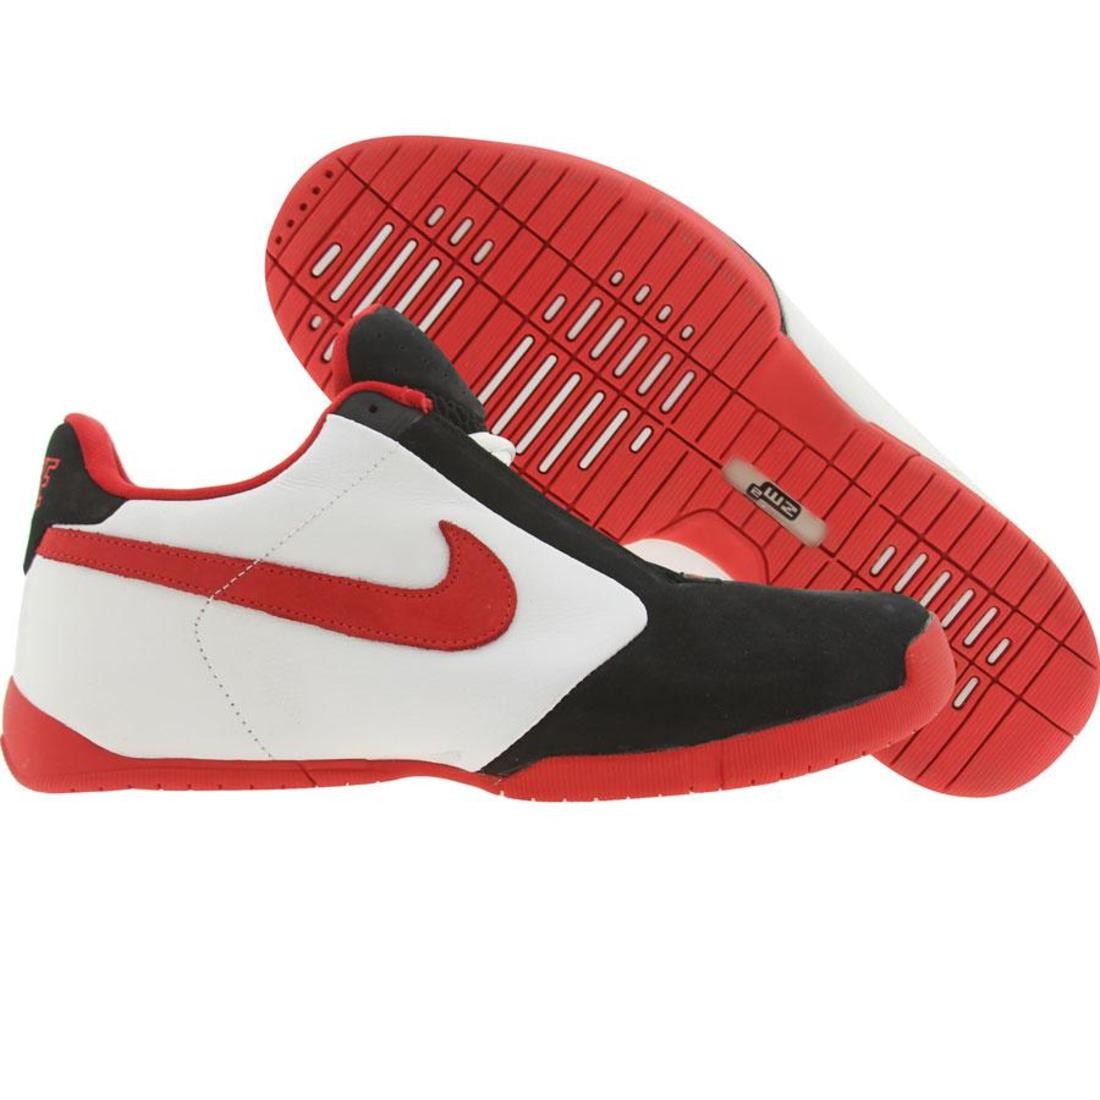 Nike Air Zoom URL (white / red / black)